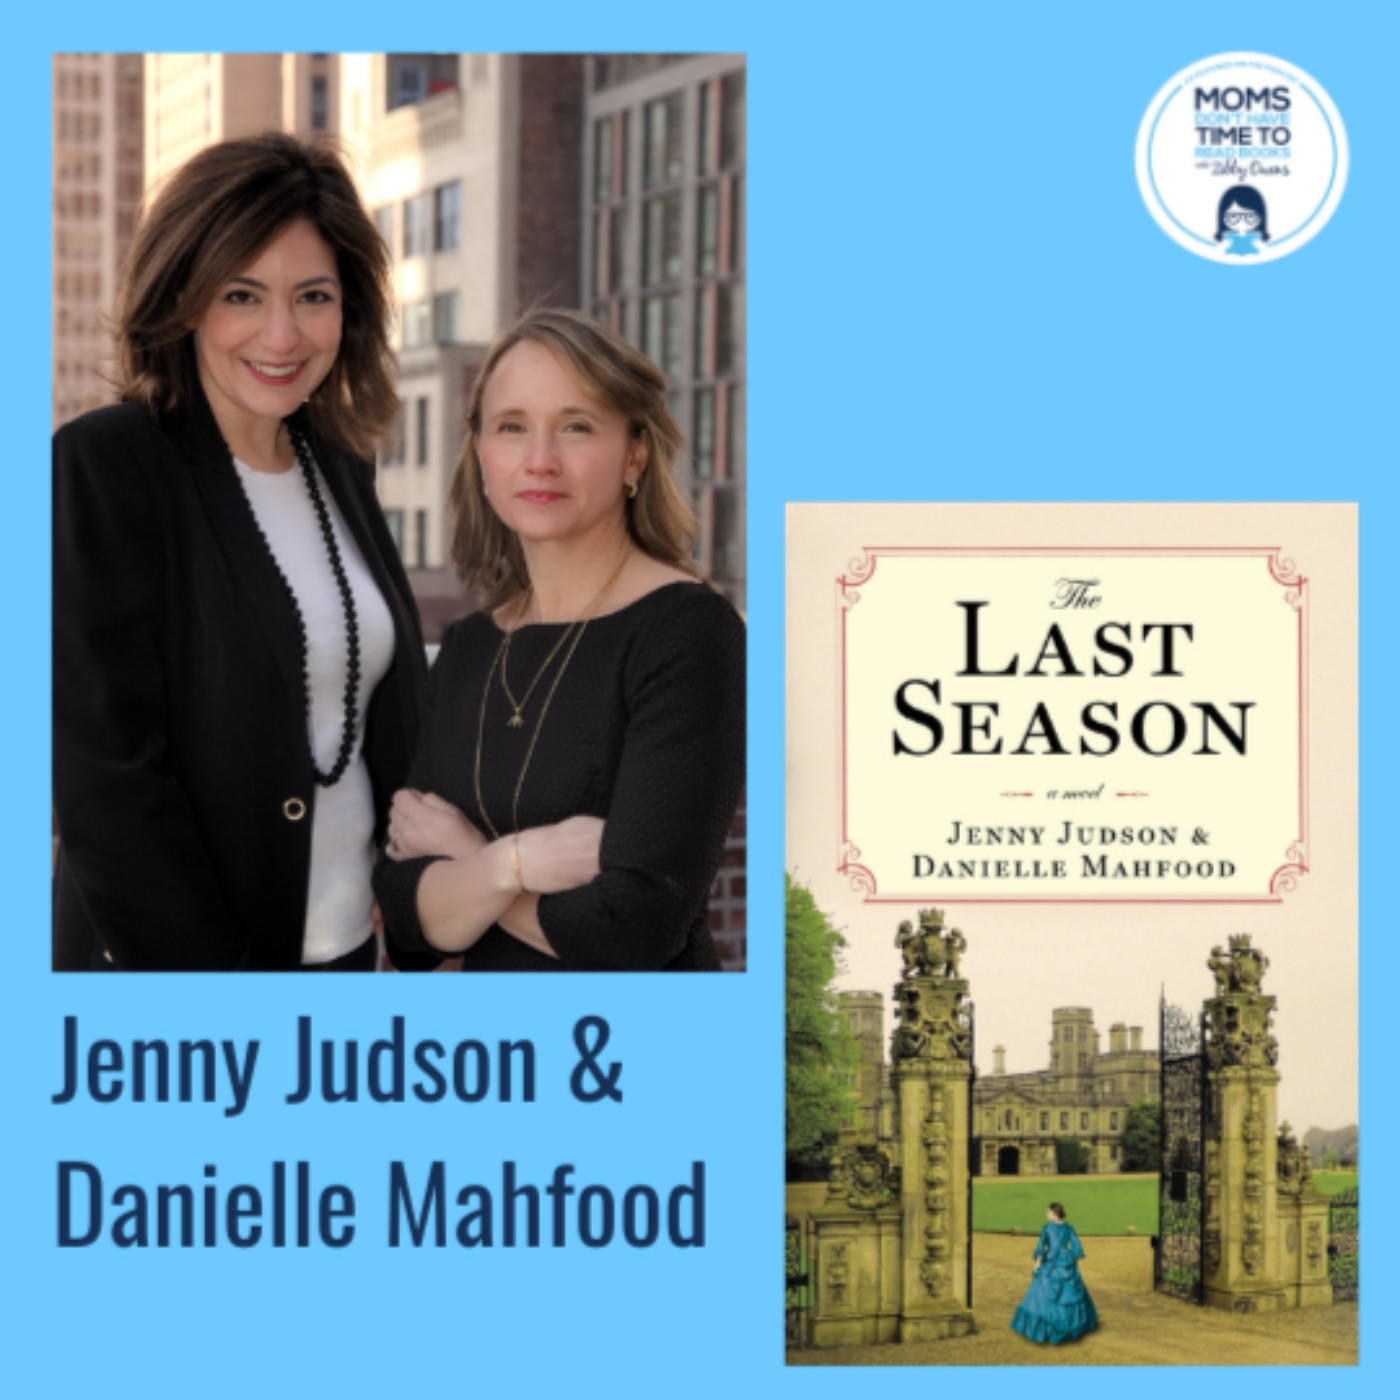 Jenny Judson and Danielle Mahfood, THE LAST SEASON